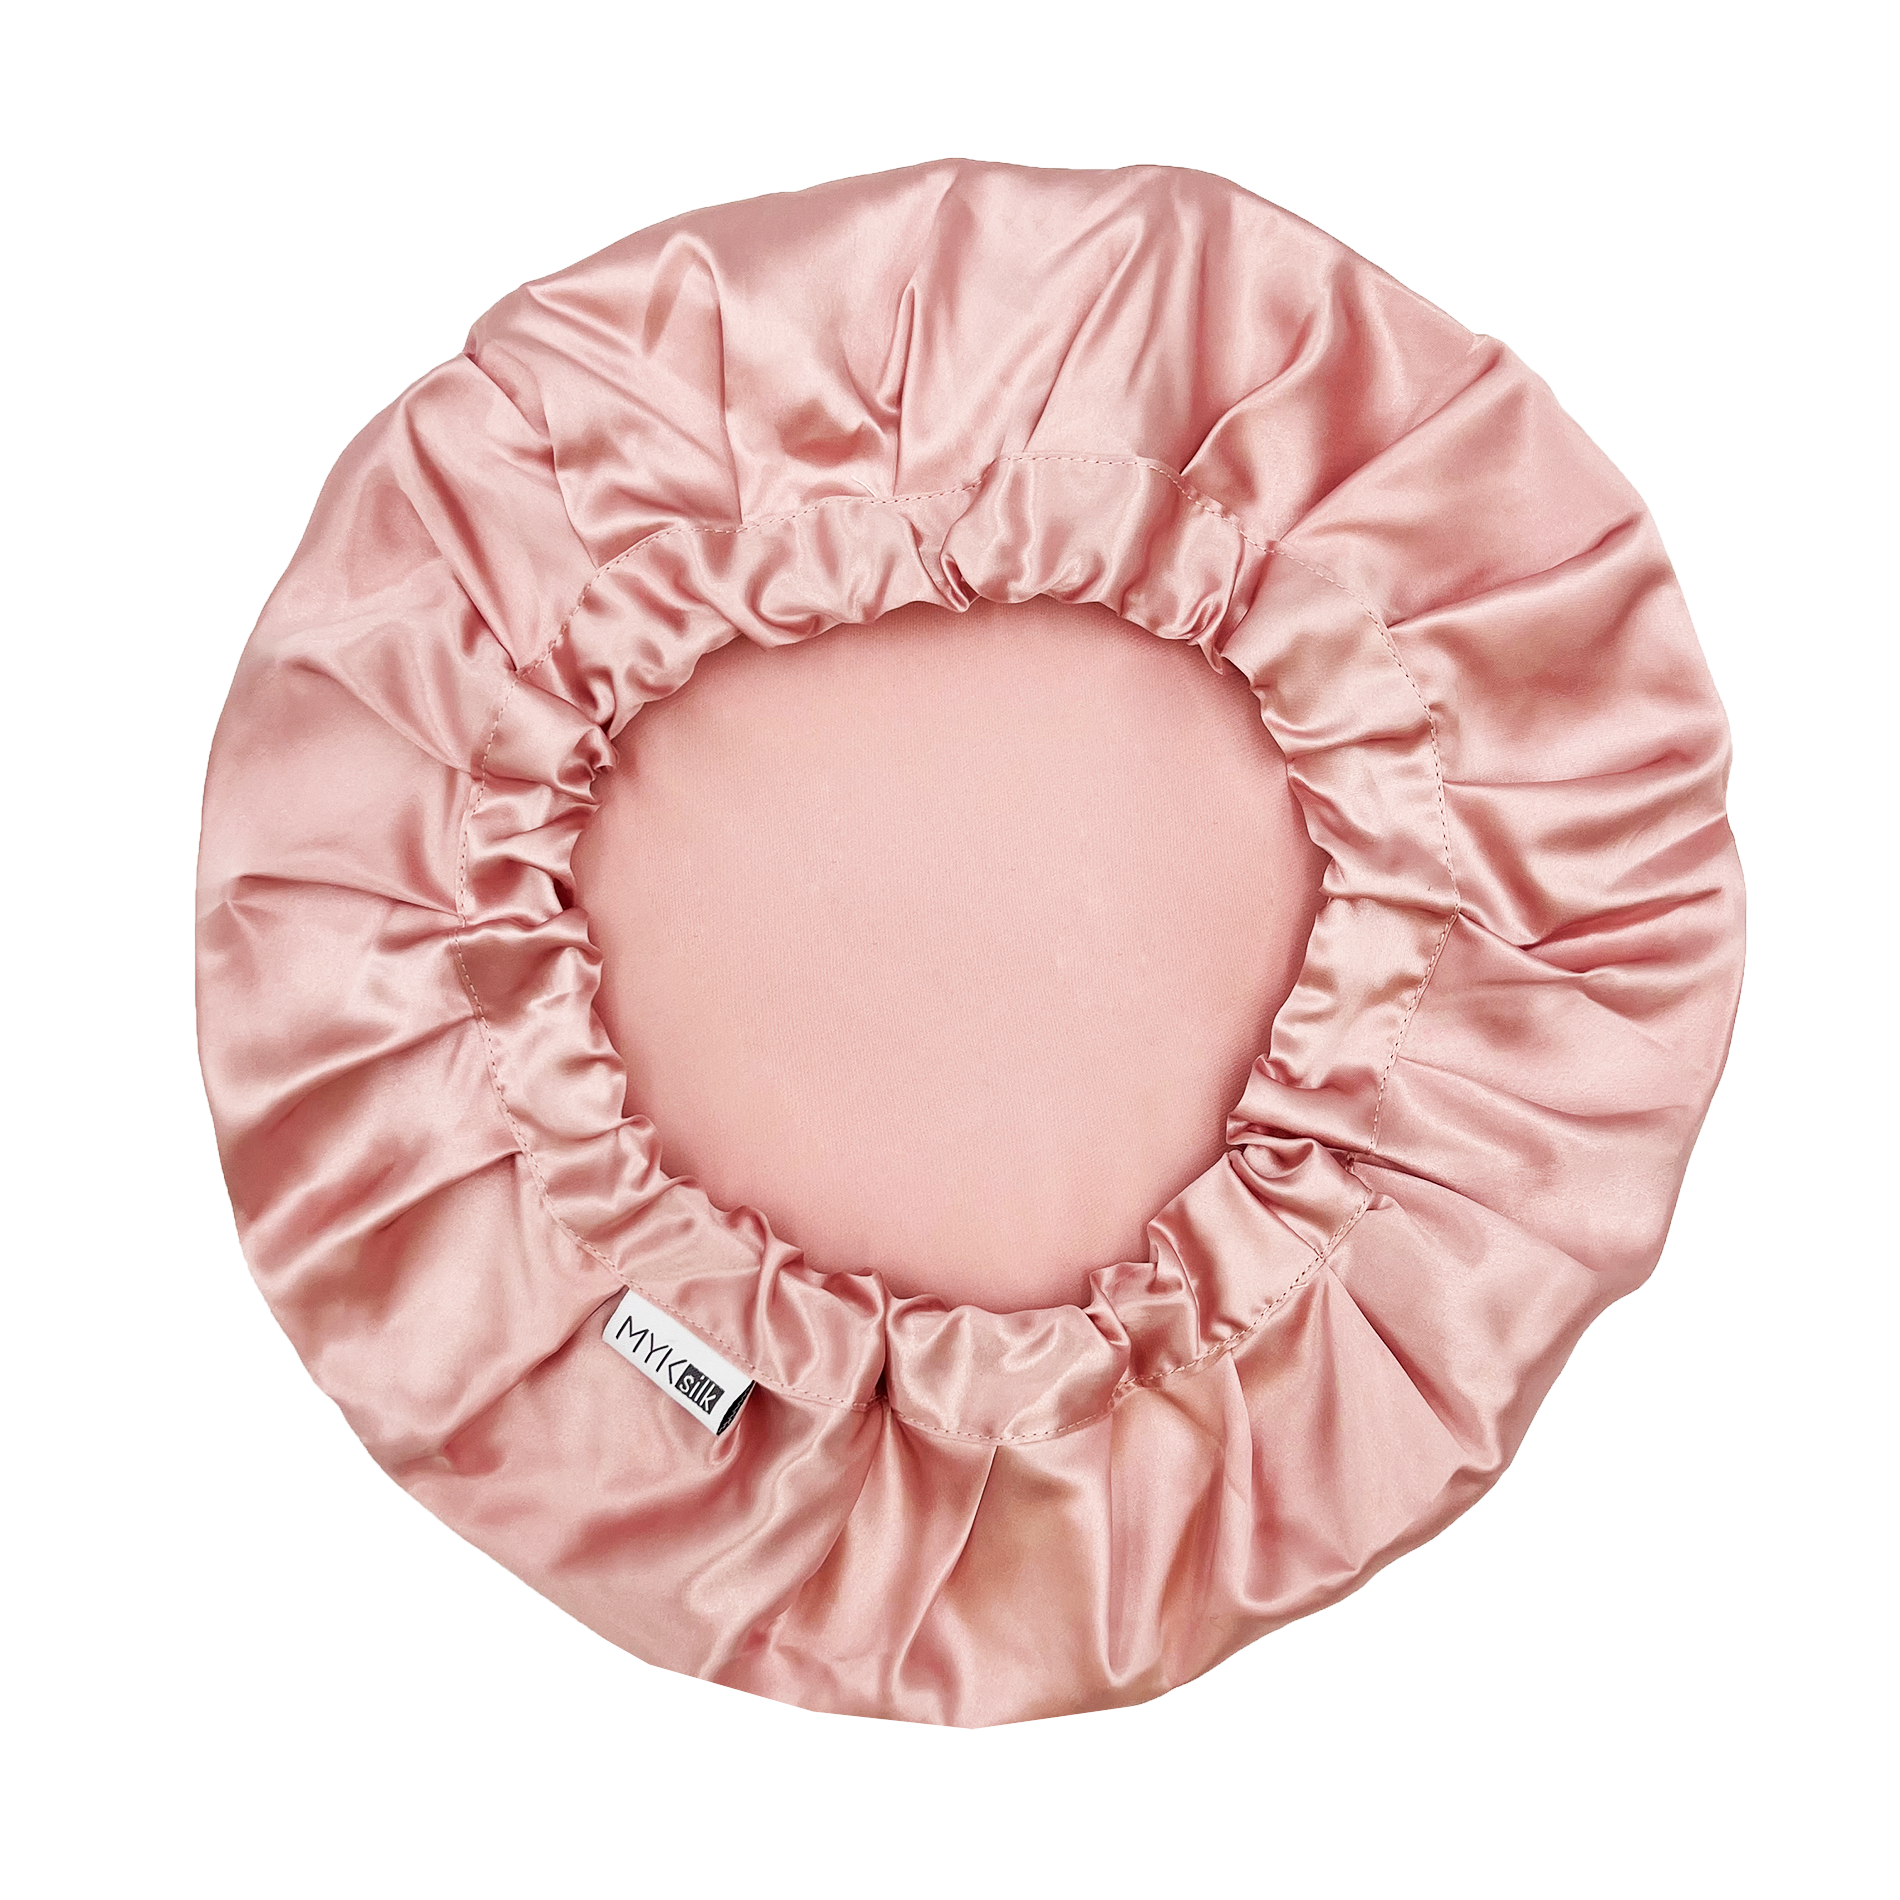 Silk Night Sleeping Cap Bonnet with Comfort Elastic Band - MYK Silk #color_pink